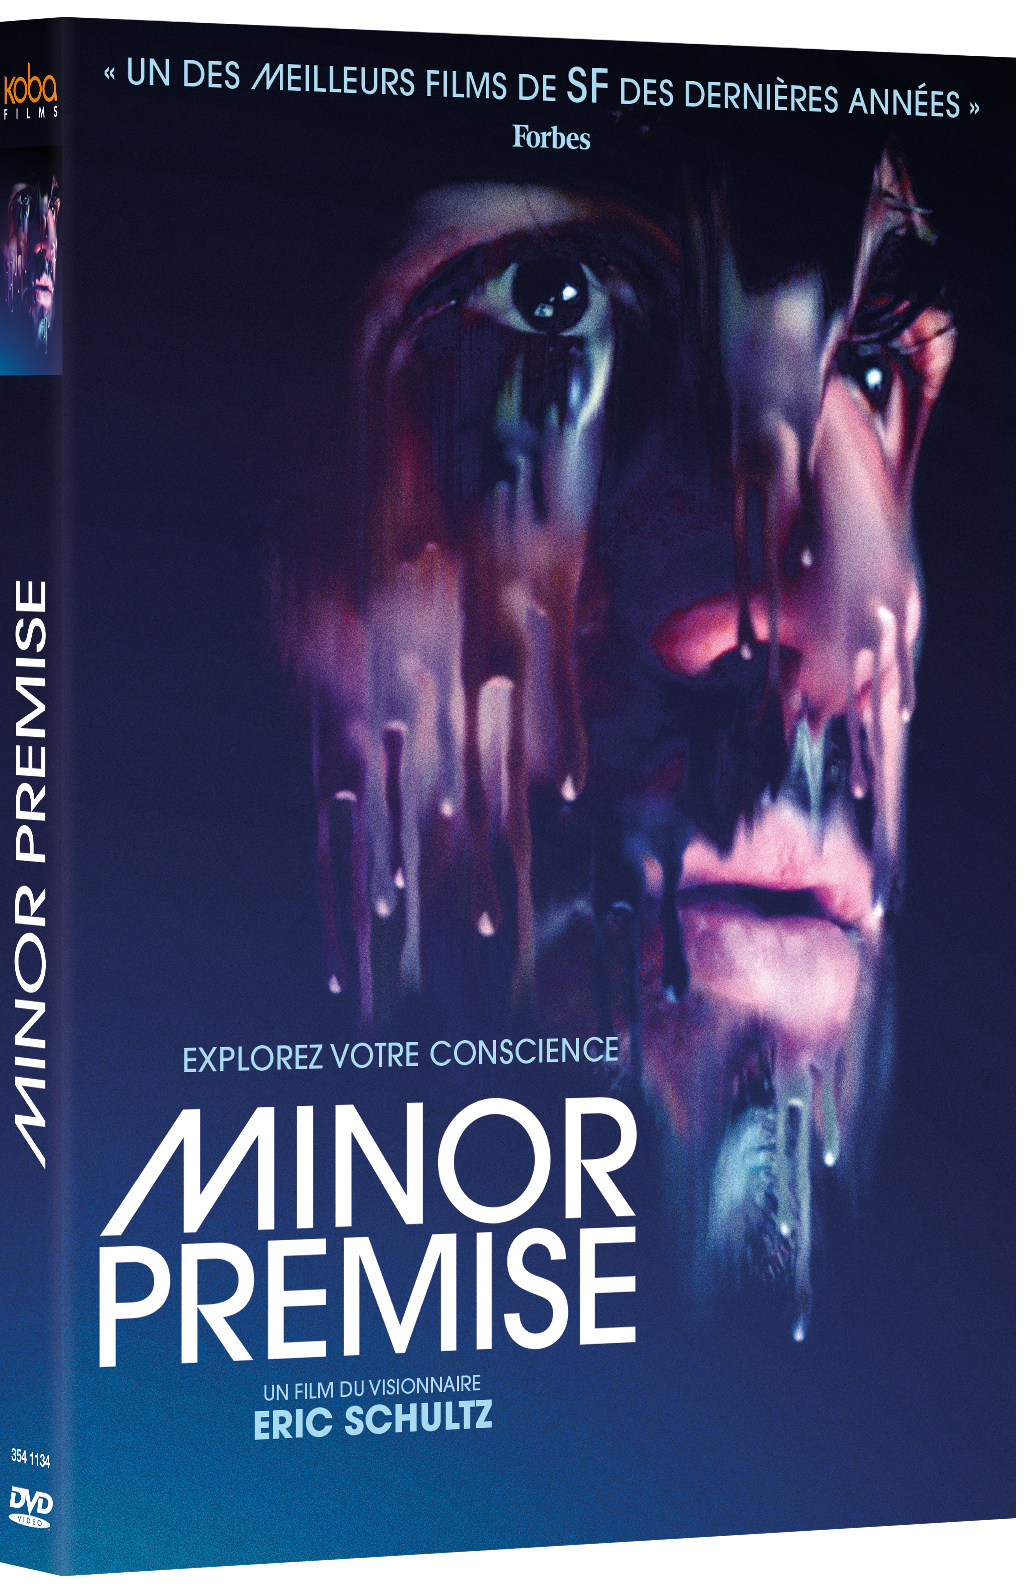 MINOR PREMISE - DVD